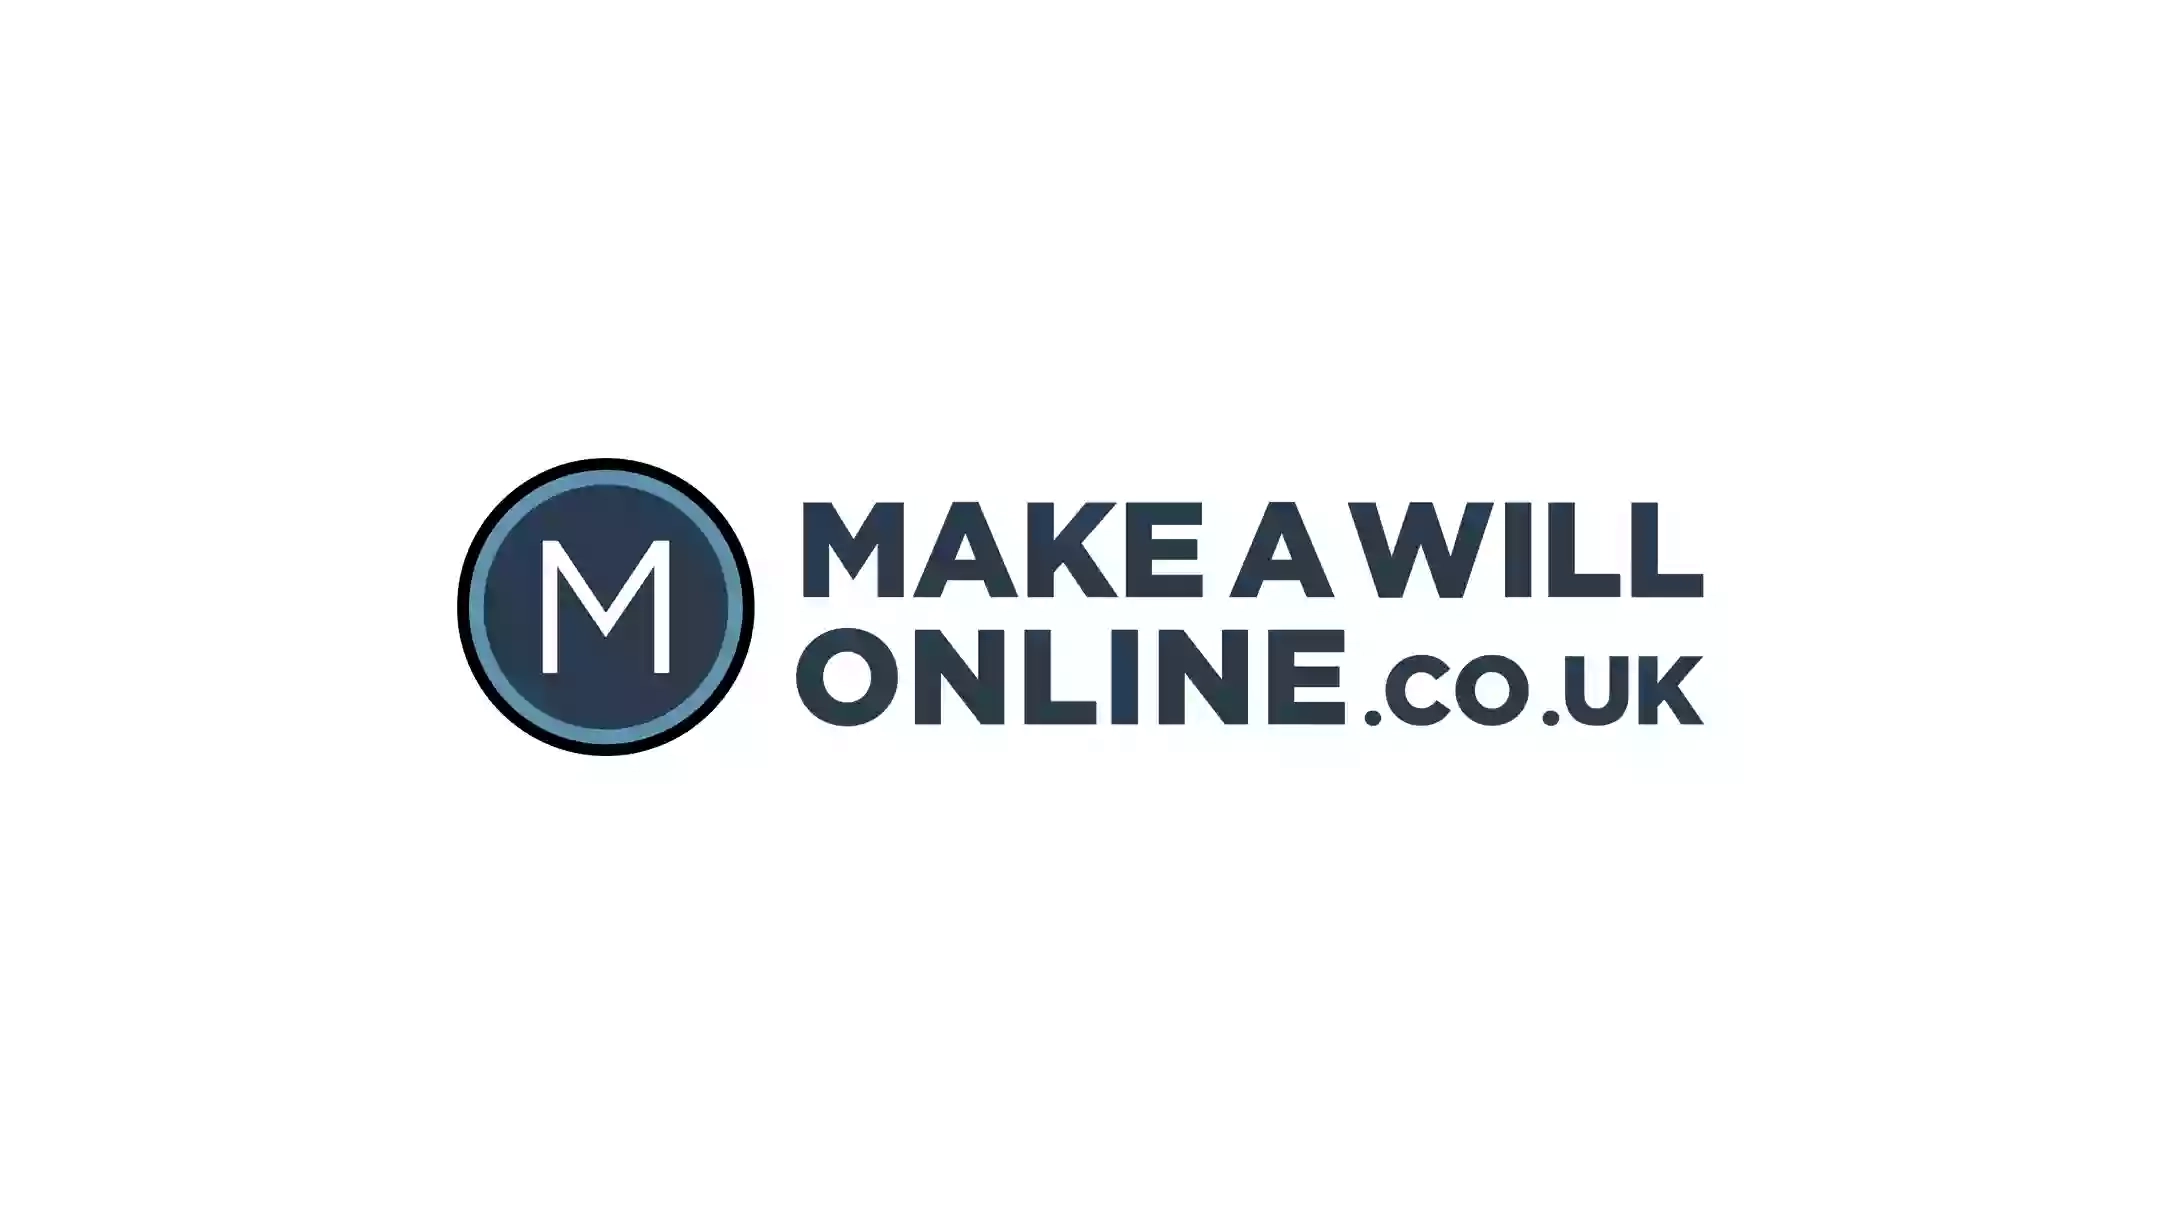 Make a Will Online